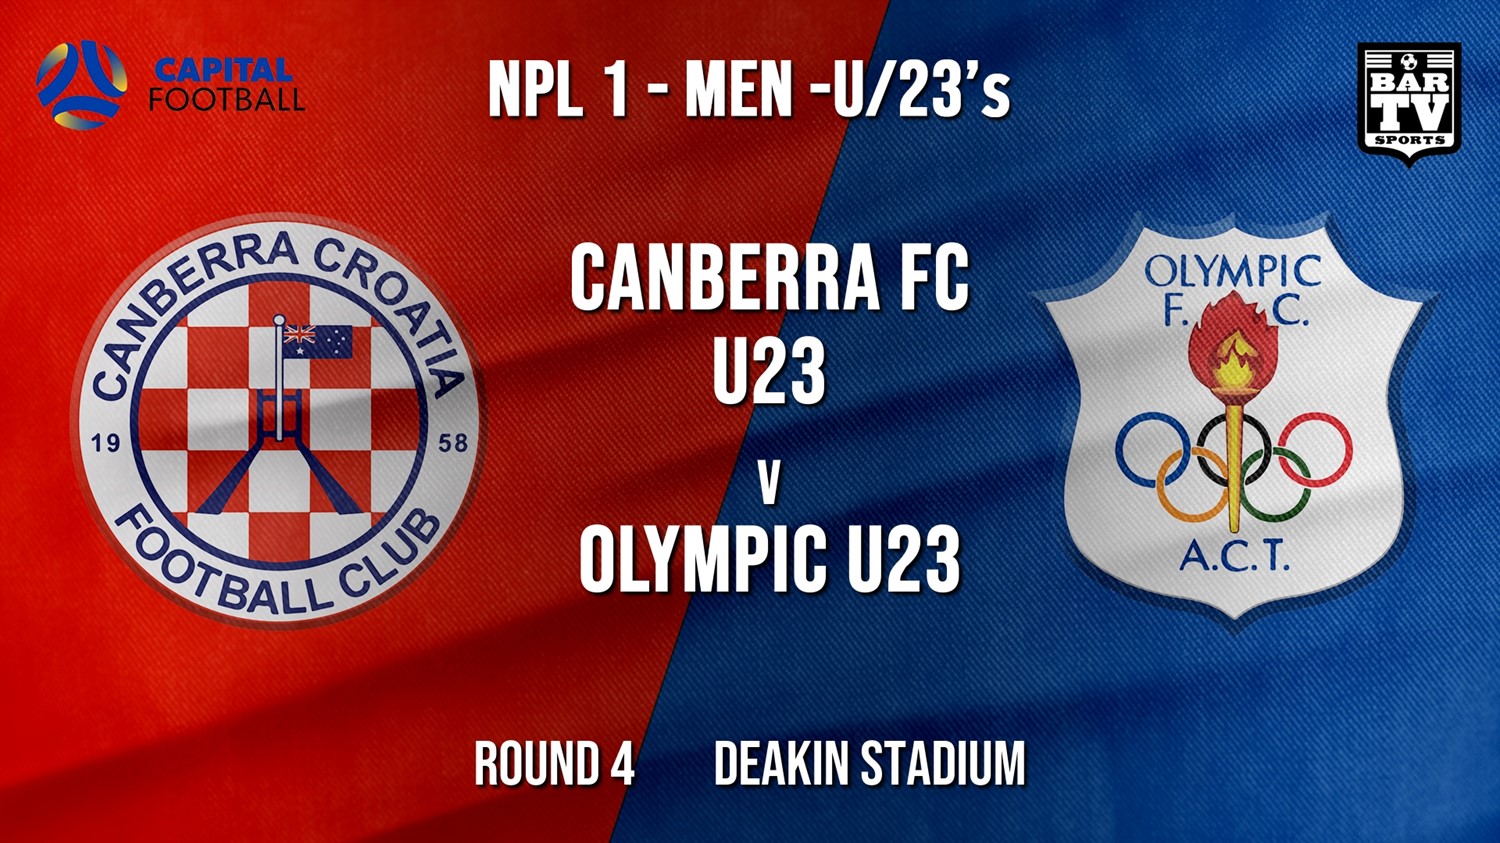 NPL1 Men - U23 - Capital Football  Round 4 - Canberra FC U23 v Canberra Olympic U23 (1) Minigame Slate Image